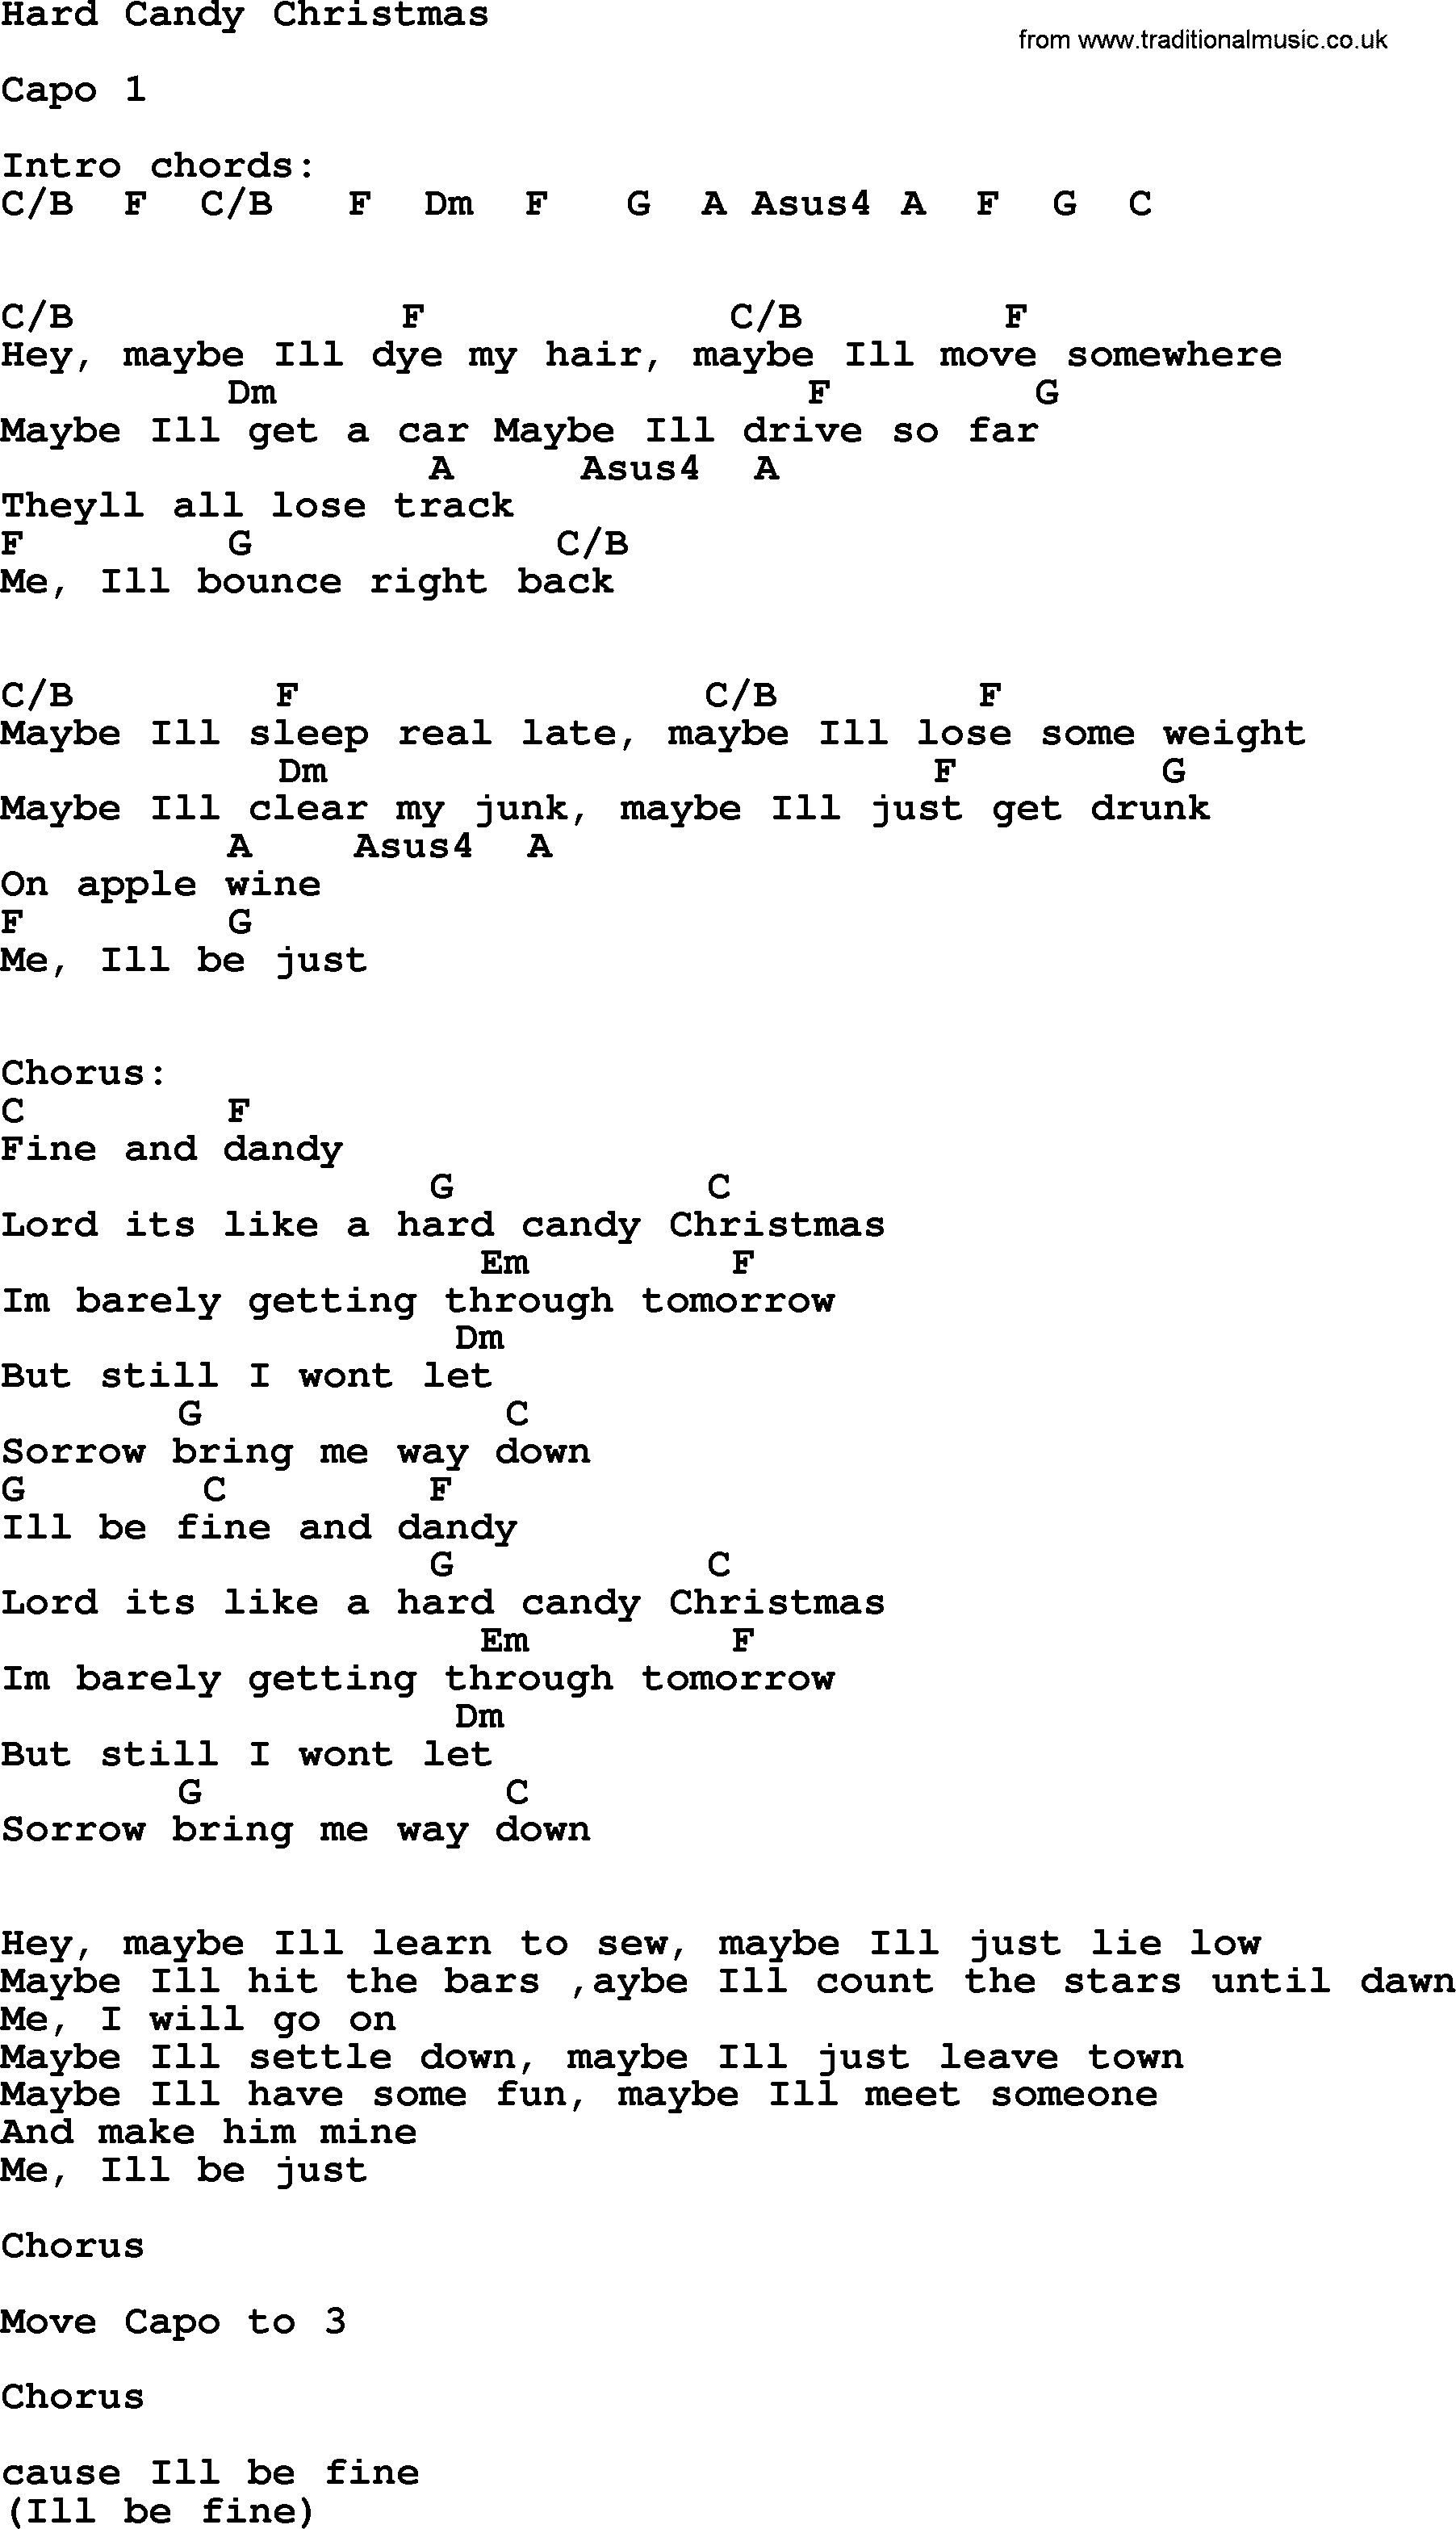 Hard Candy Christmas Song
 Dolly Parton song Hard Candy Christmas lyrics and chords